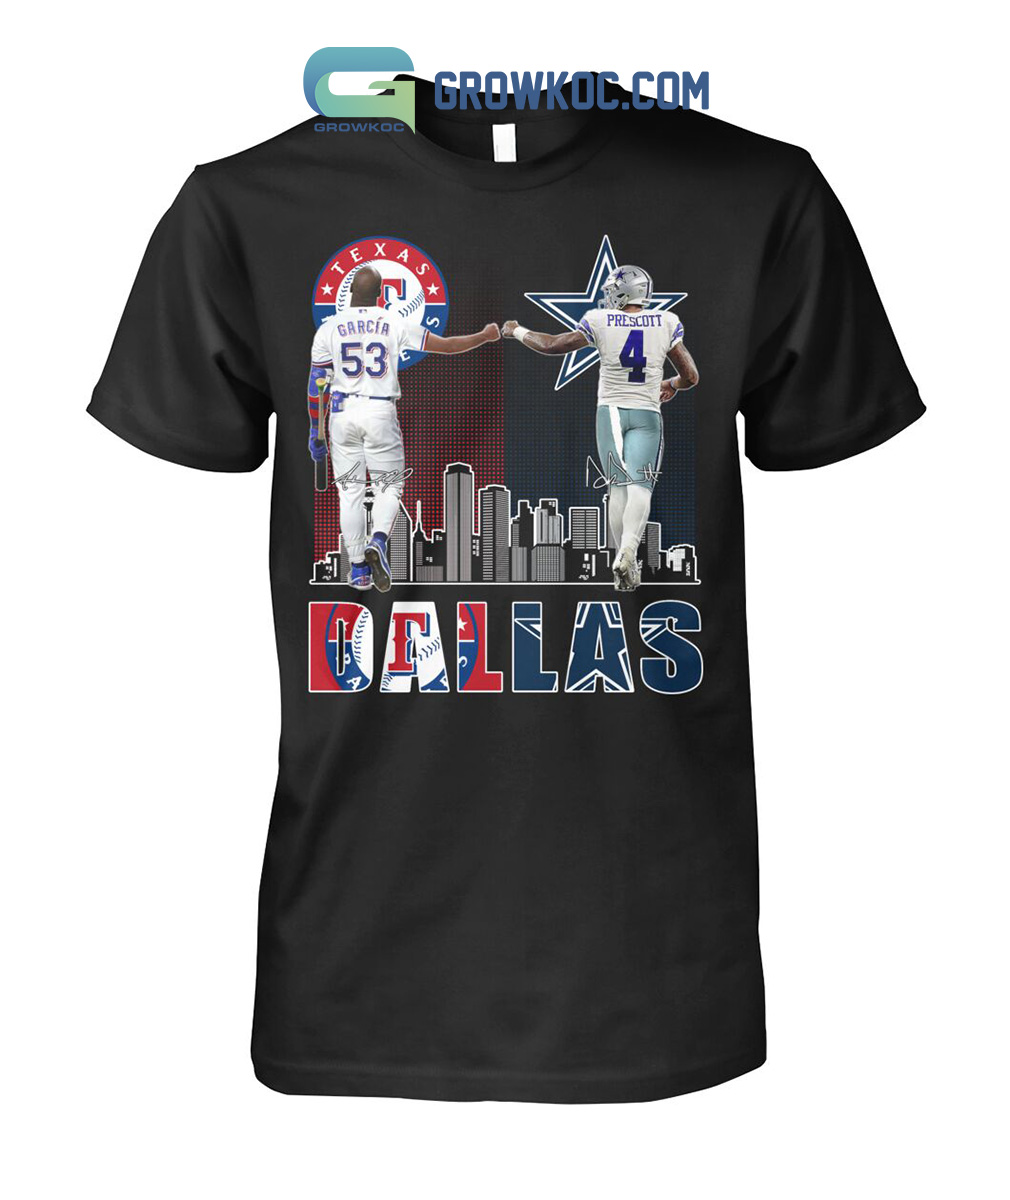 Dallas Texas And City Prescott Garcia Rangers Champion Growkoc Cowboys - T Shirt